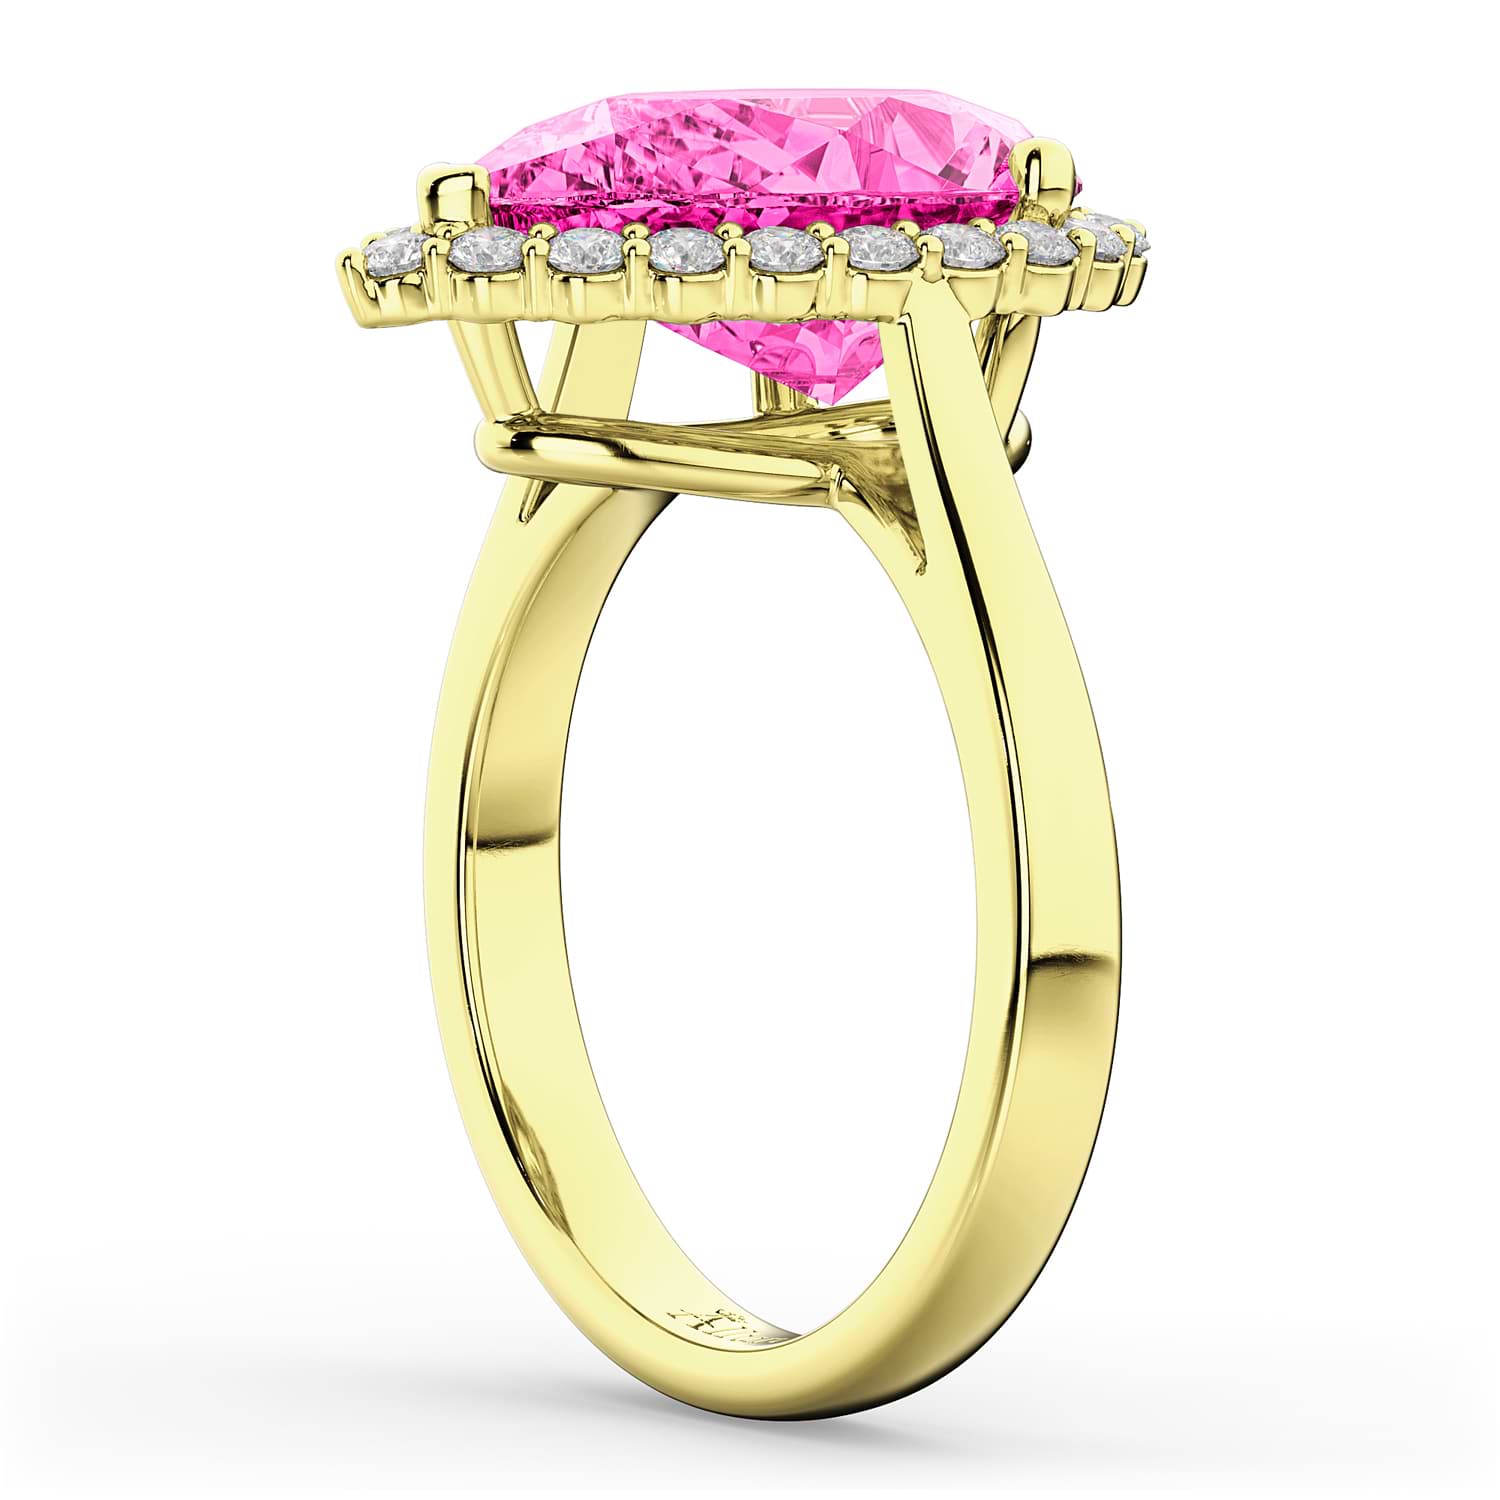 Pear Cut Halo Pink Tourmaline & Diamond Engagement Ring 14K Yellow Gold 7.19ct